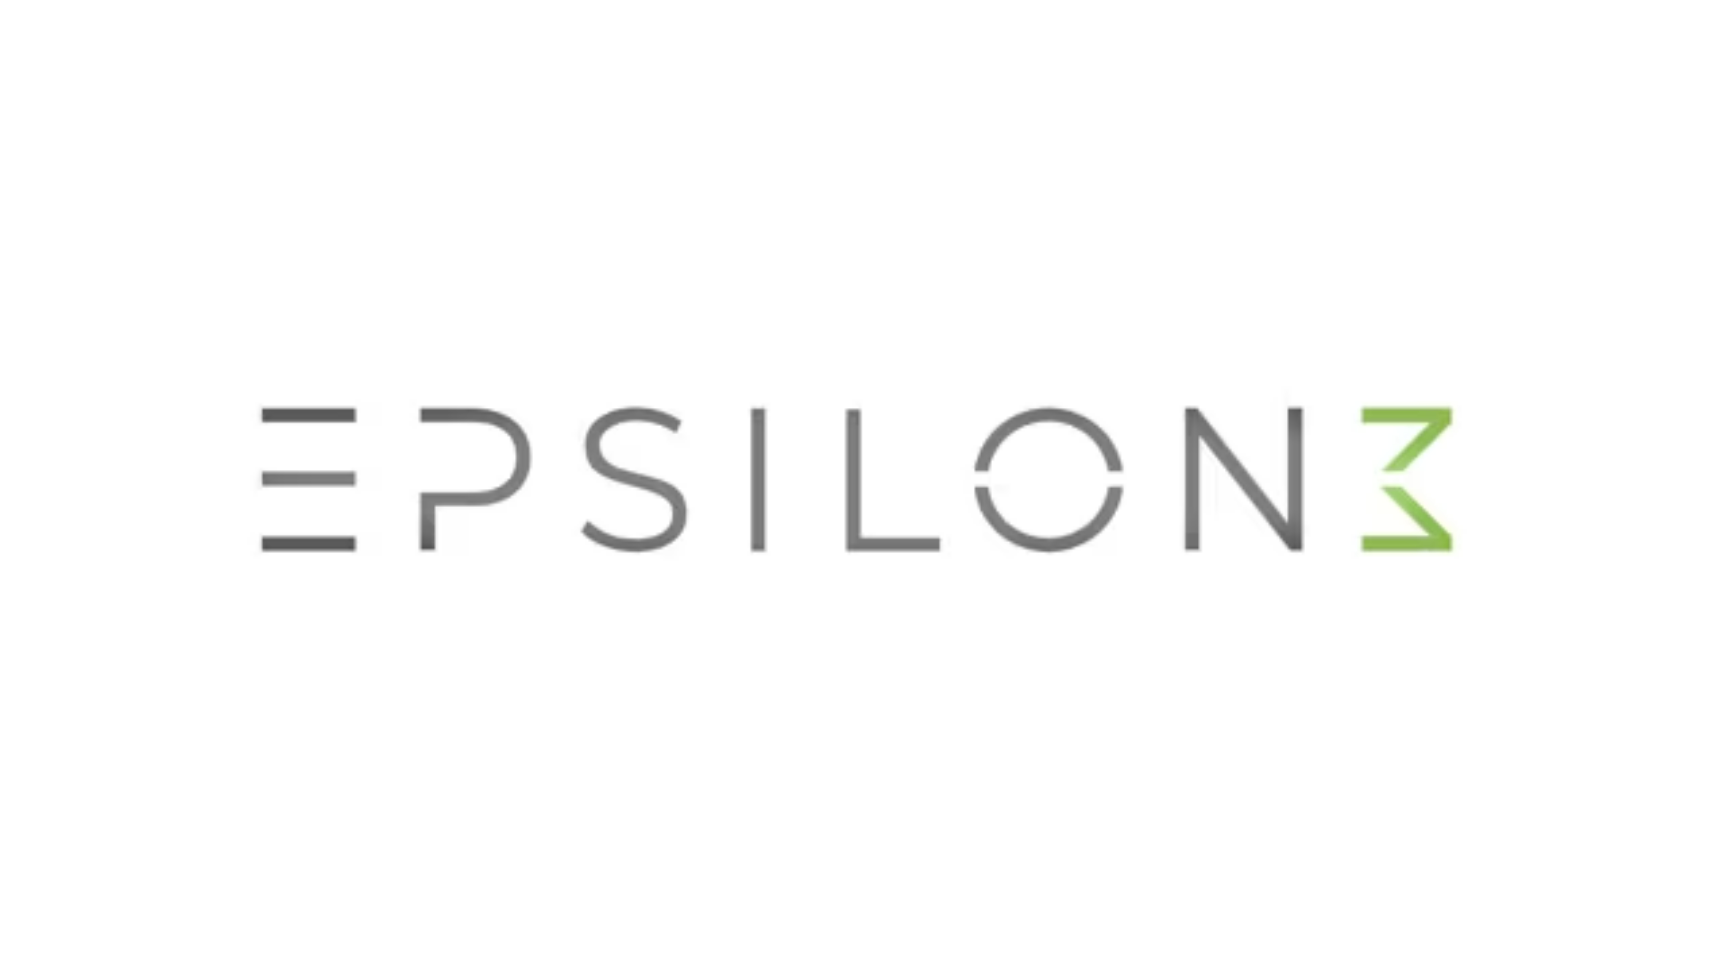 epsilon3 logo grey writing on a white background